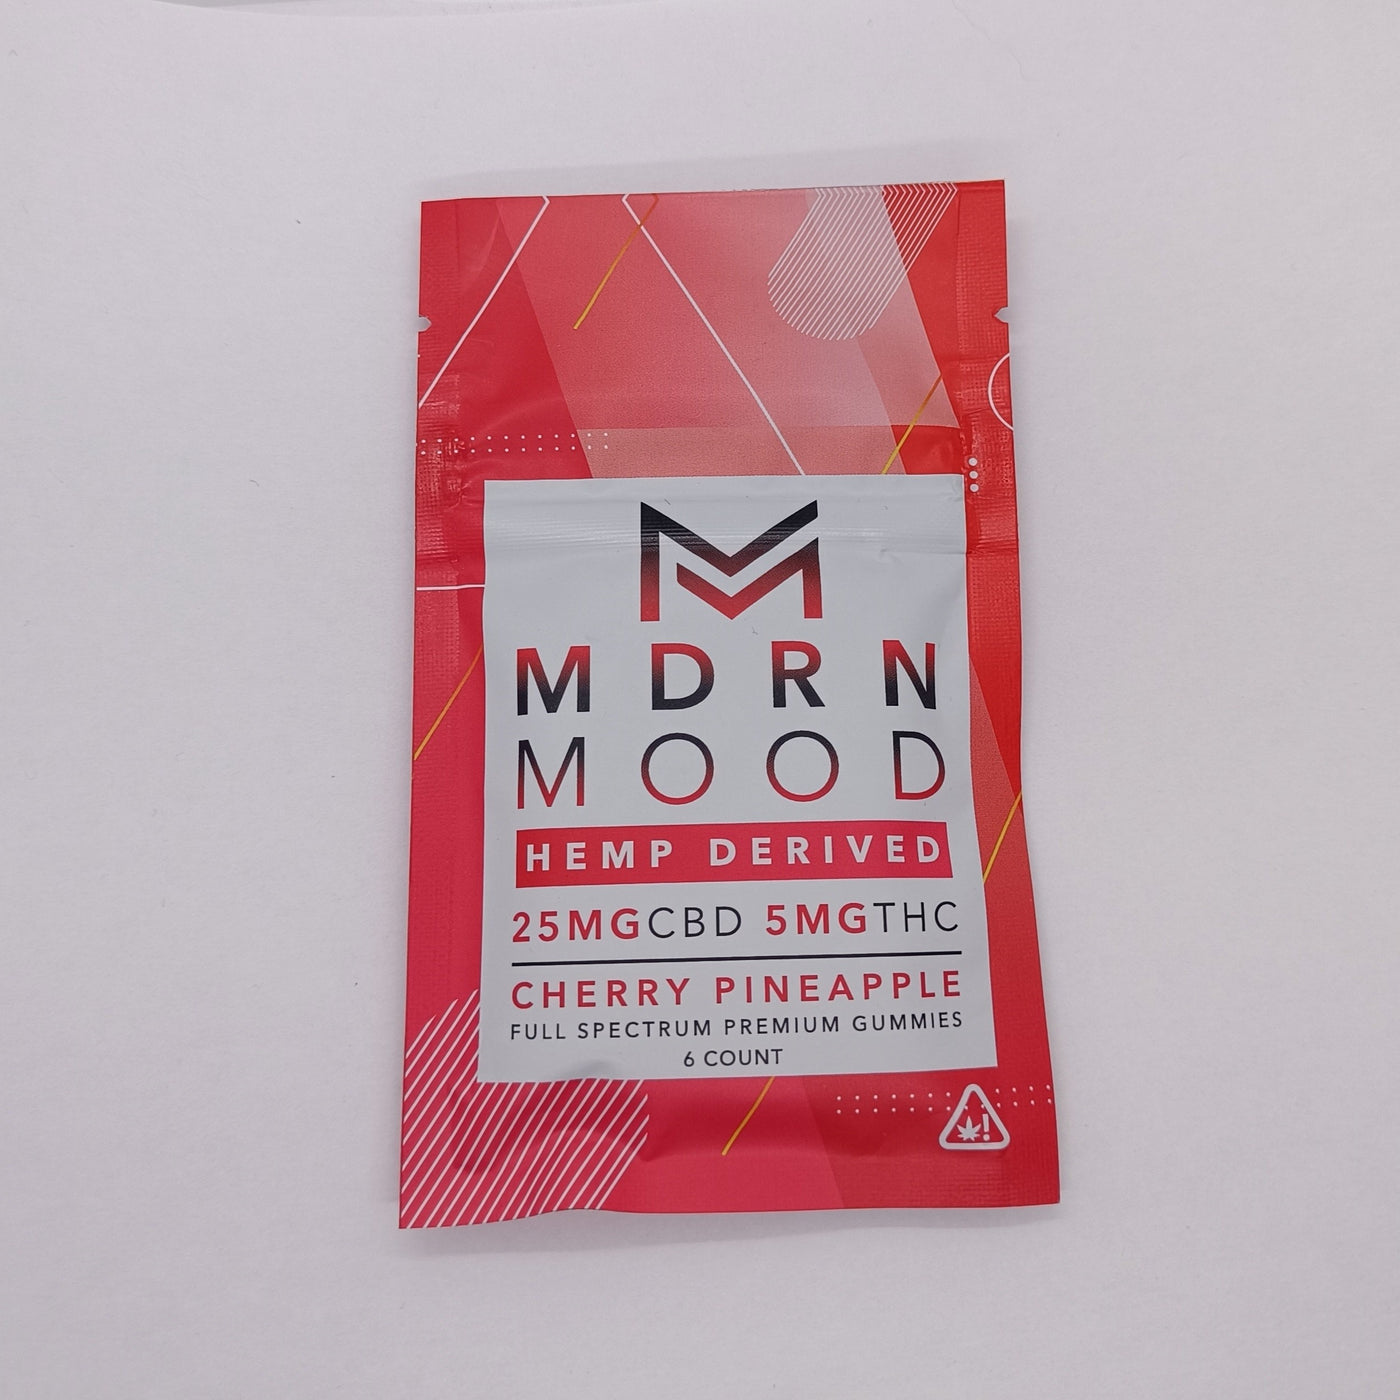 MDRN MOOD - 6 GUMMIES - 25mg CBD/5mg THC - CHERRY PINEAPPLE